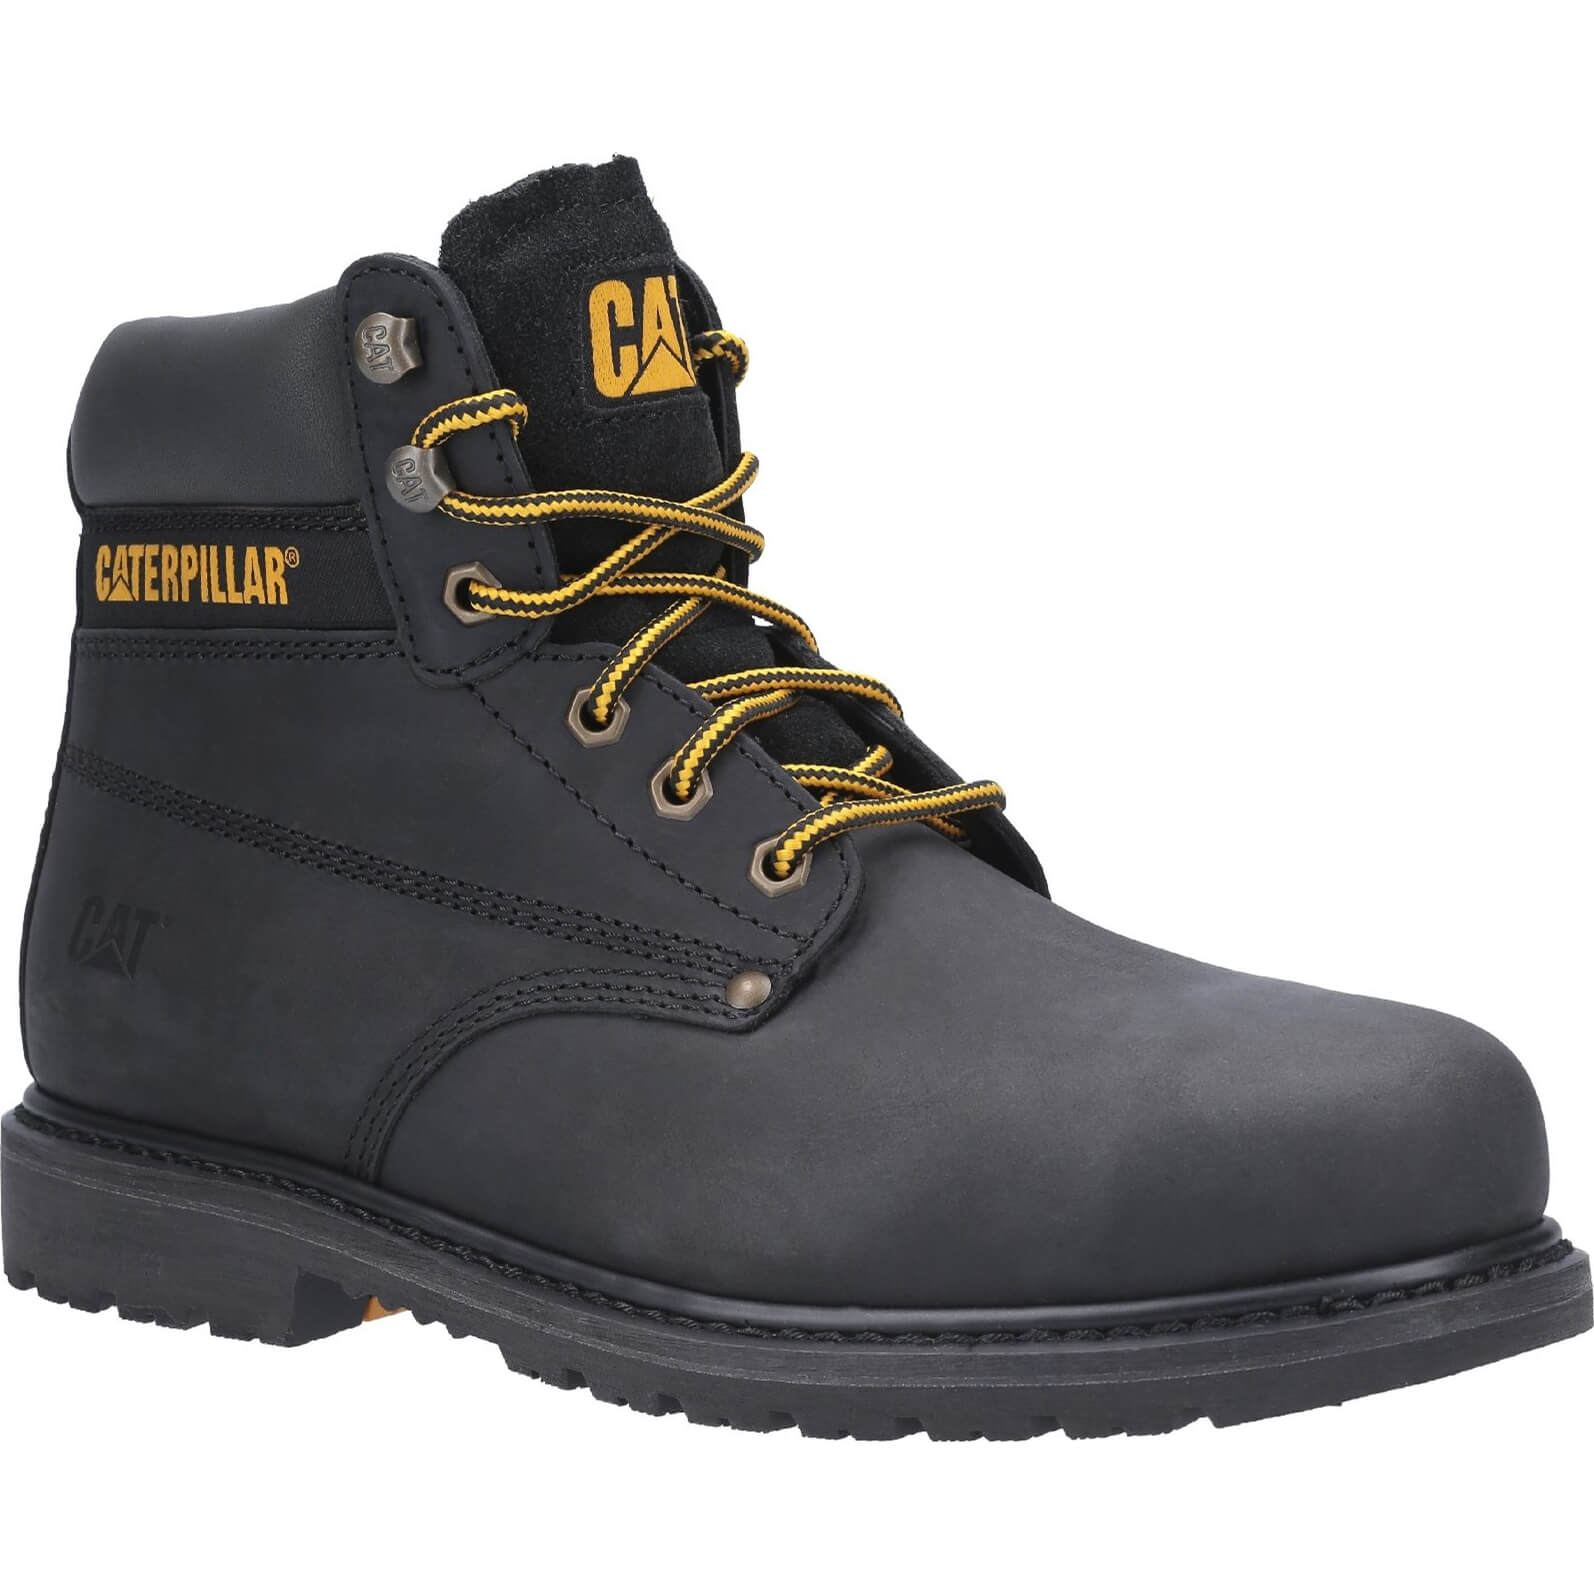 Caterpillar Powerplant GYW Safety Boot Black Size 11